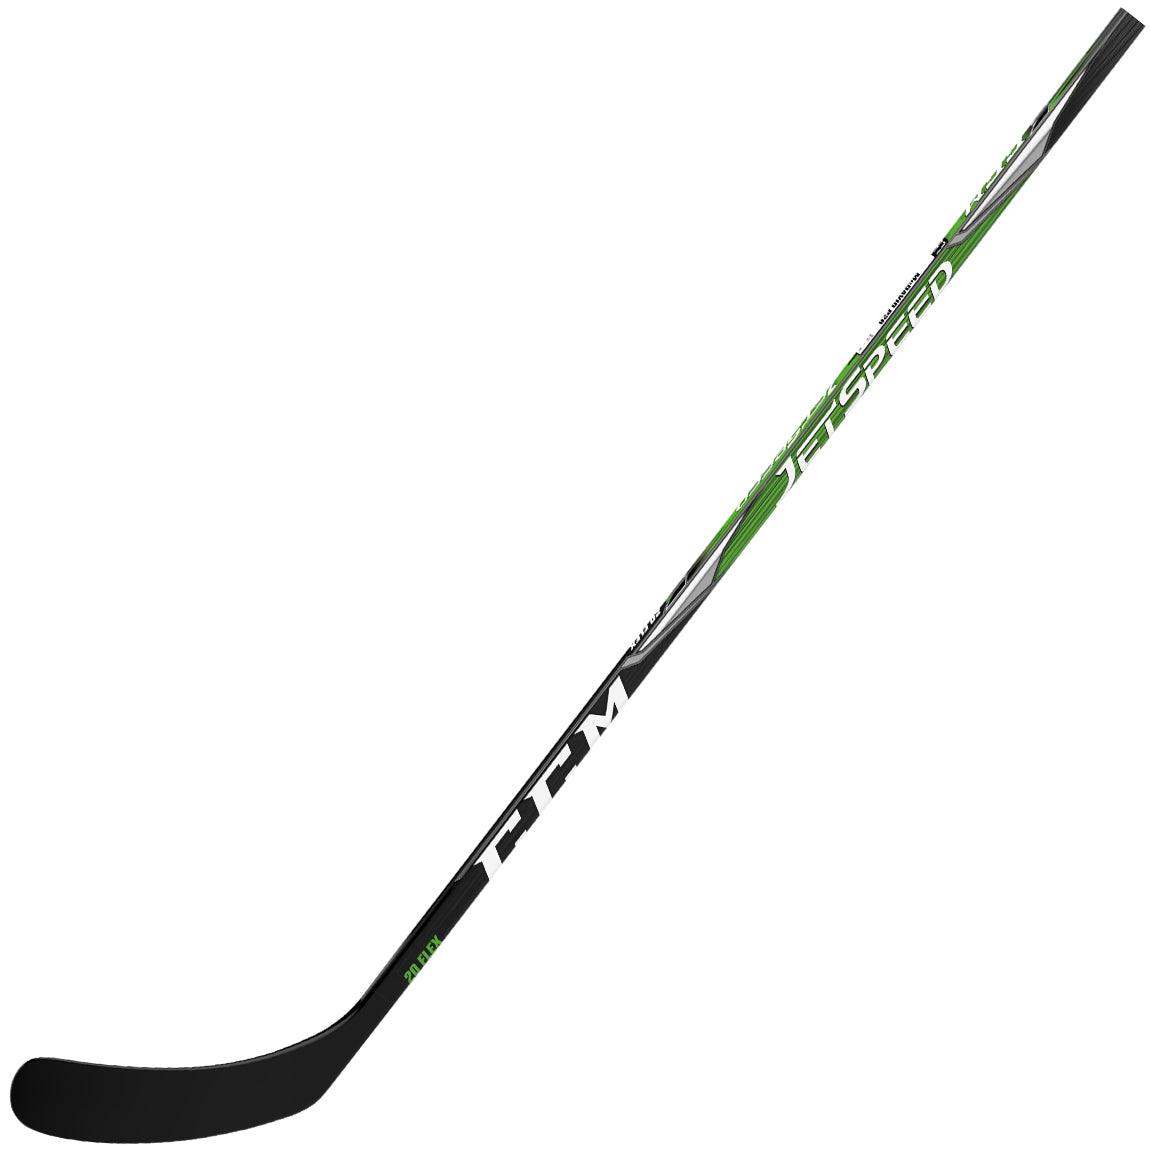 JetSpeed 20 Hockey Stick - Youth - Sports Excellence